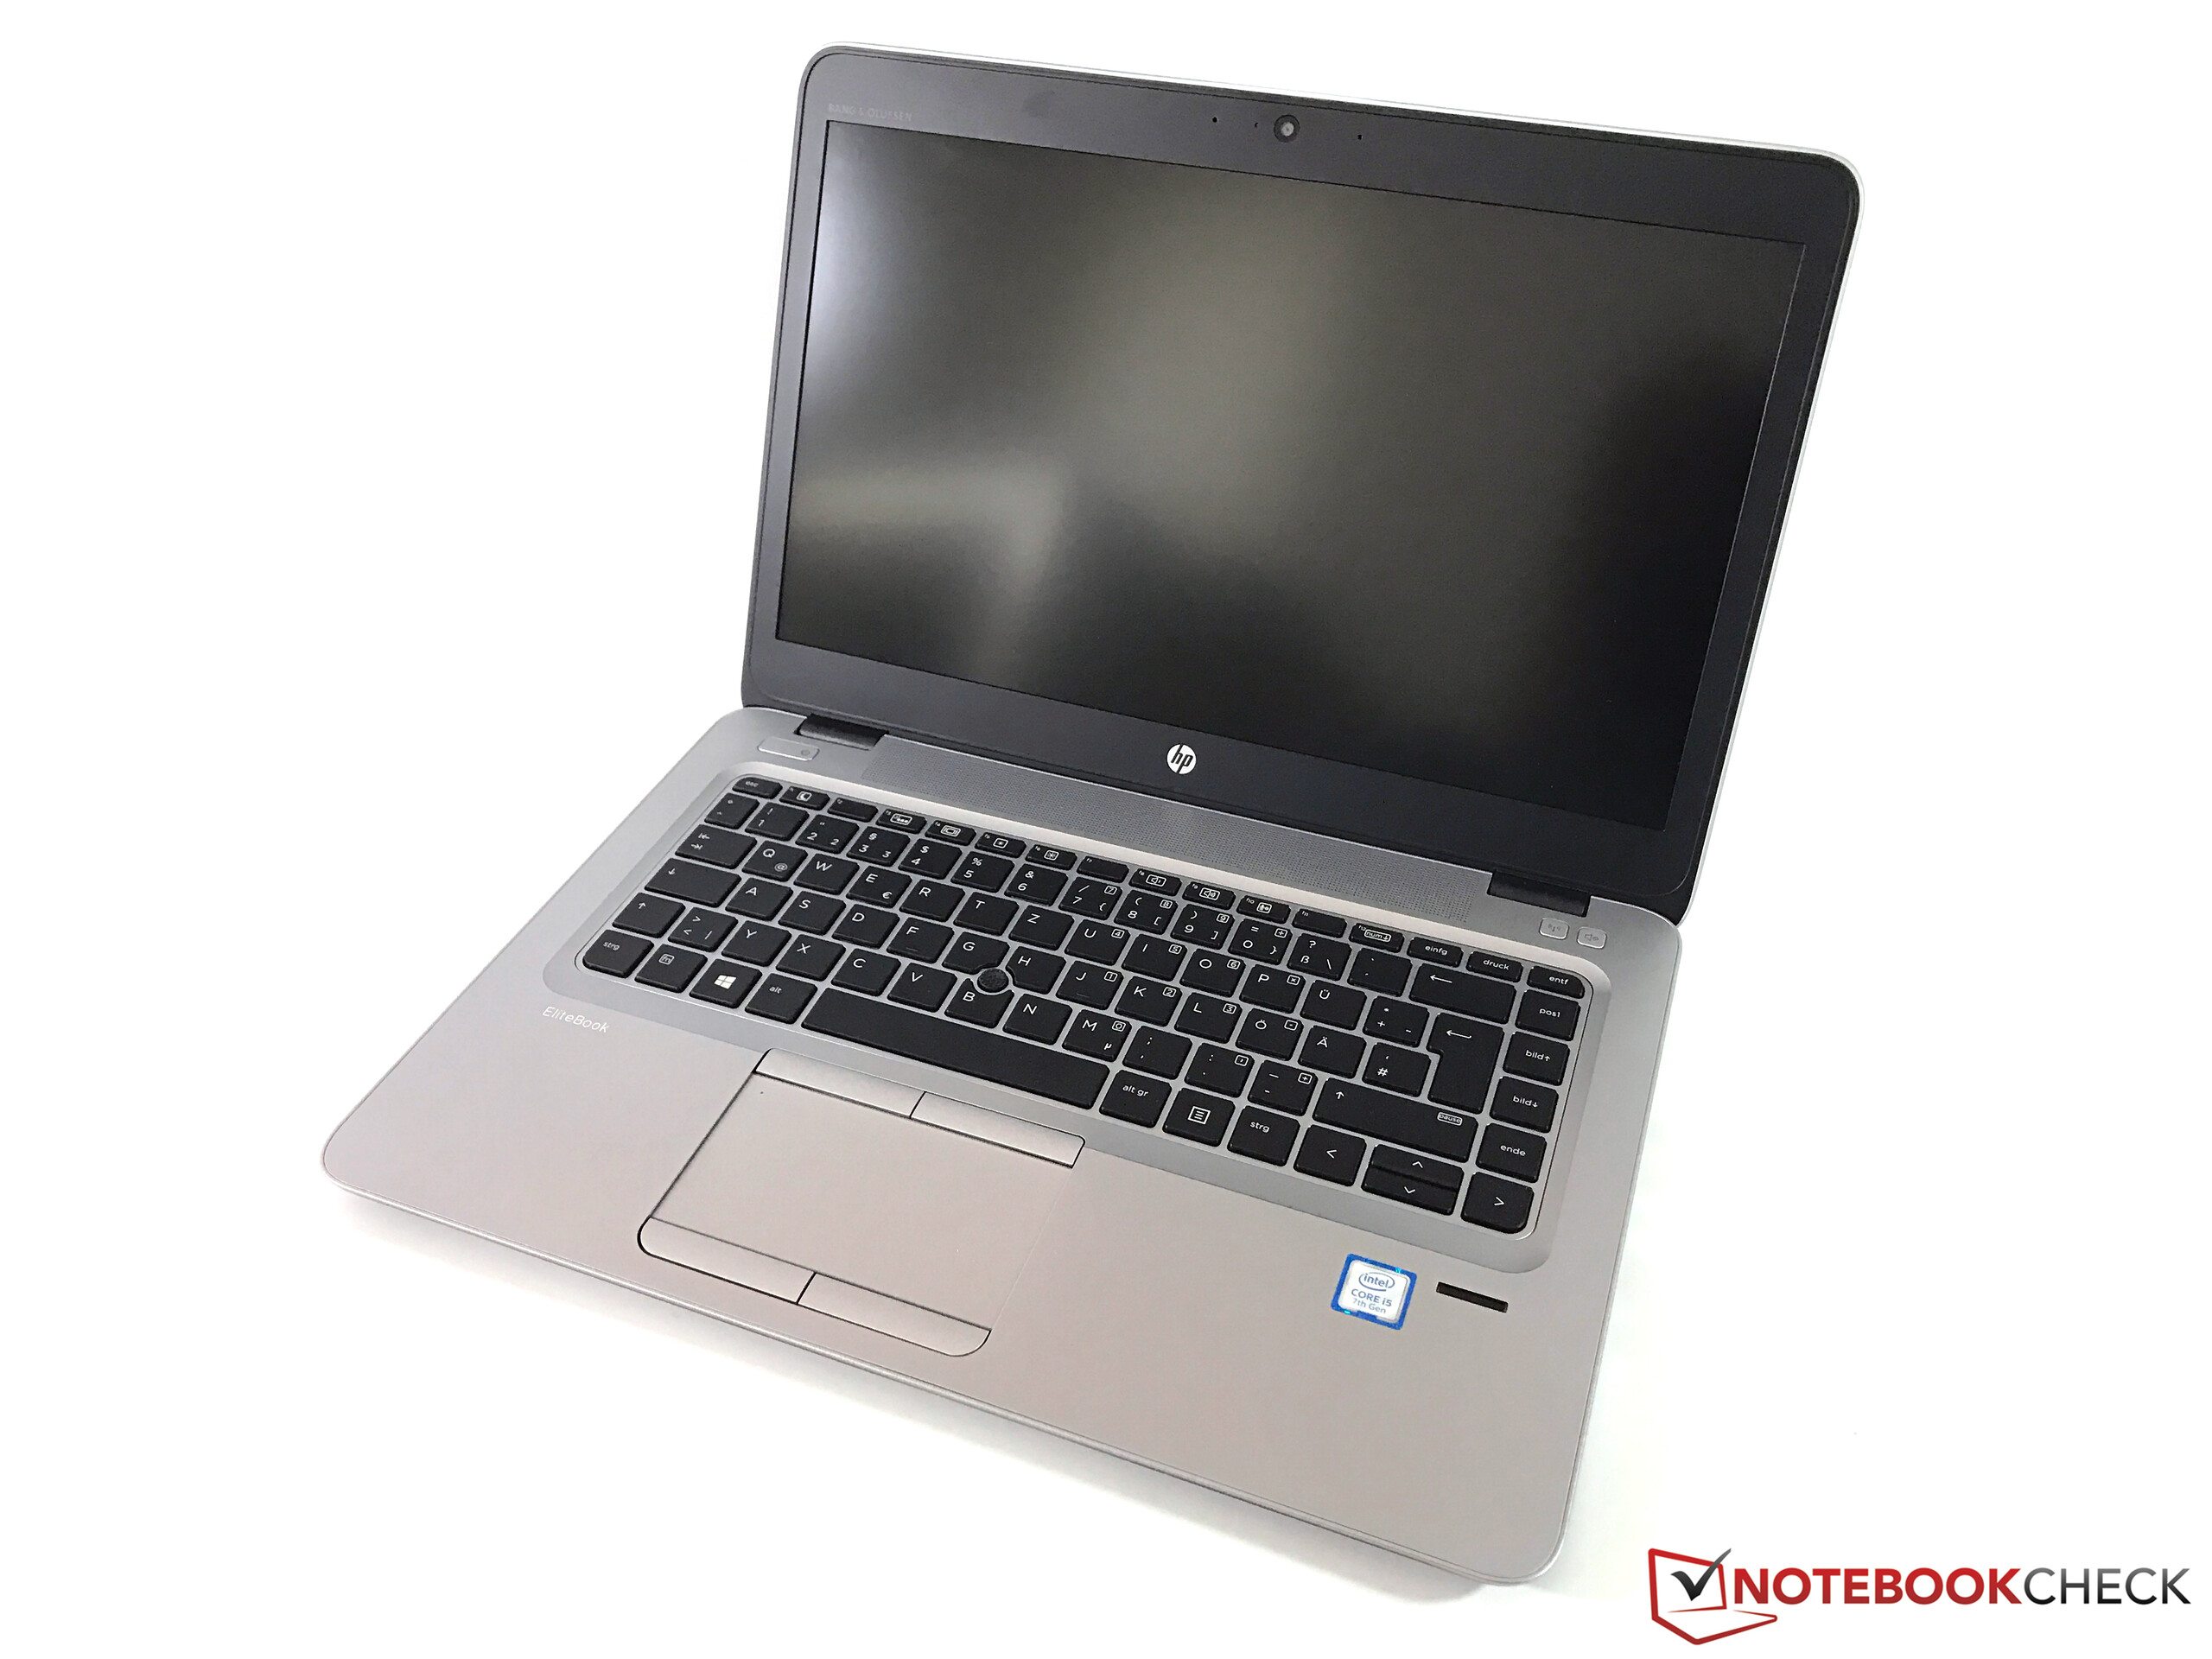 Hp Elitebook 840 G4 HP EliteBook 840 G4 (7200U, Full HD) Laptop Review - NotebookCheck.net  Reviews